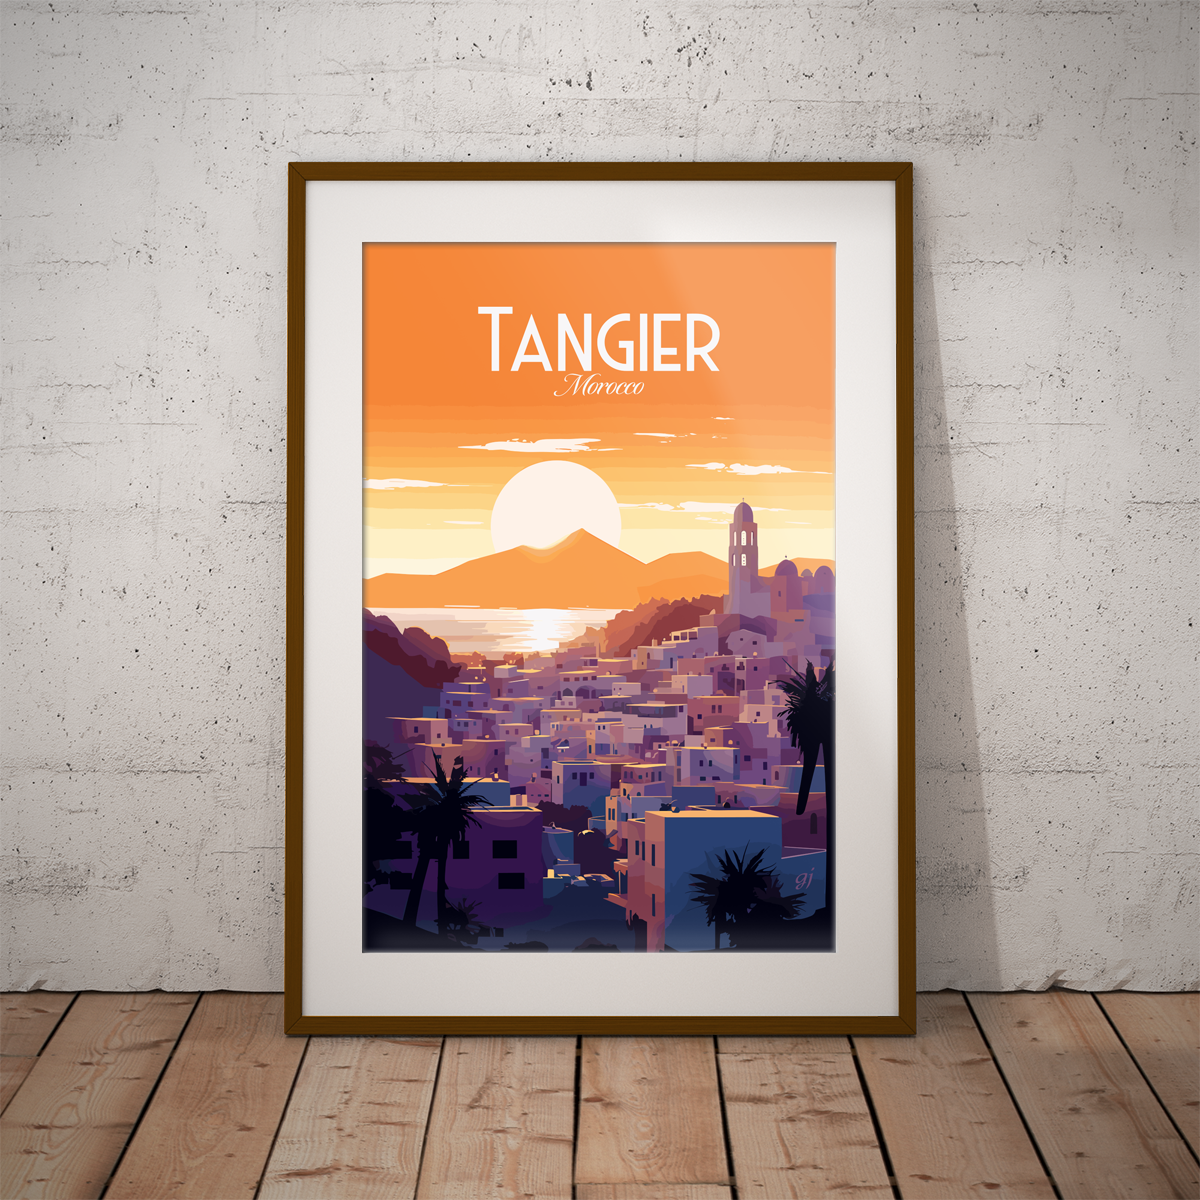 Tangier poster by bon voyage design